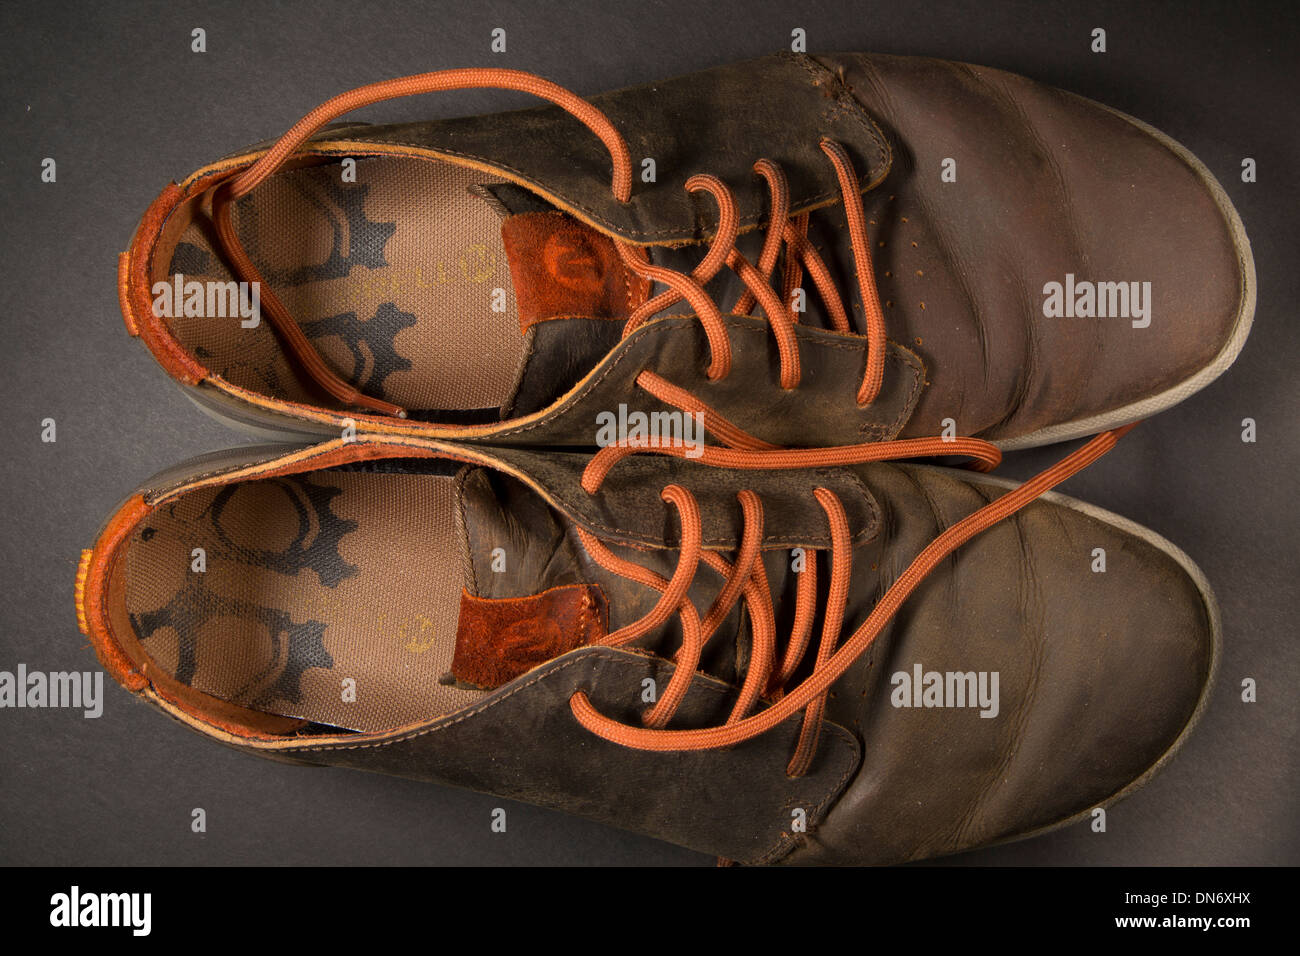 orange merrell shoes